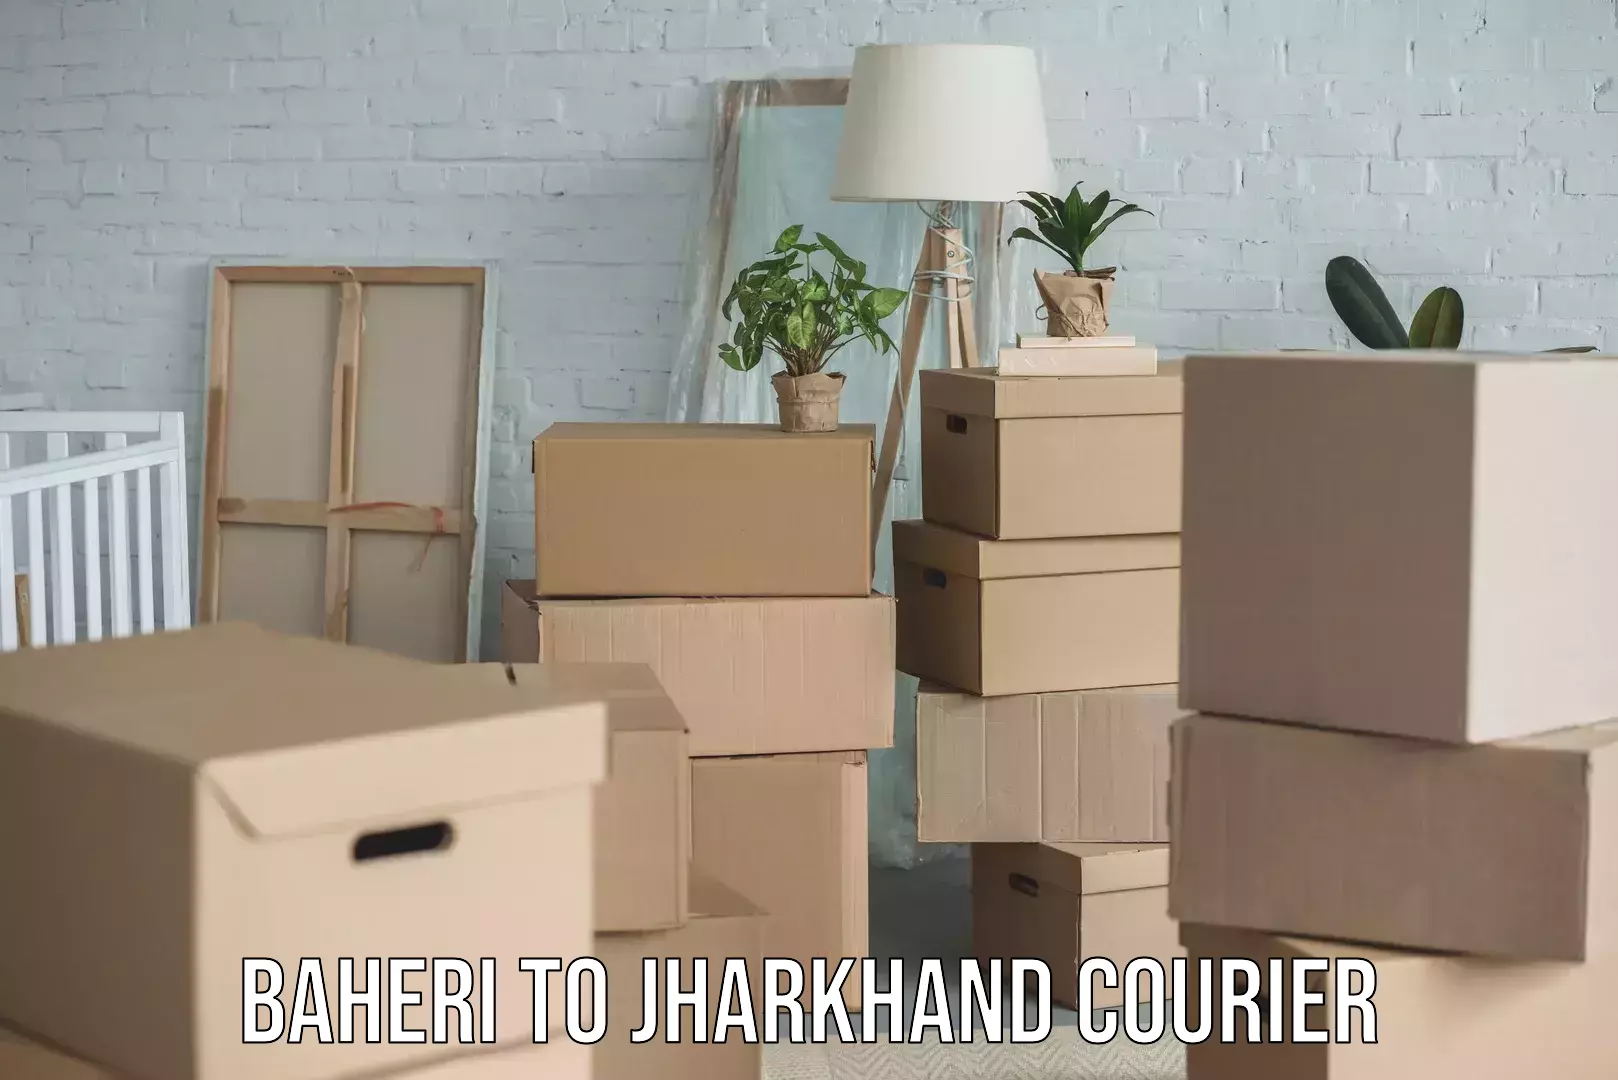 Courier service comparison Baheri to Jharkhand